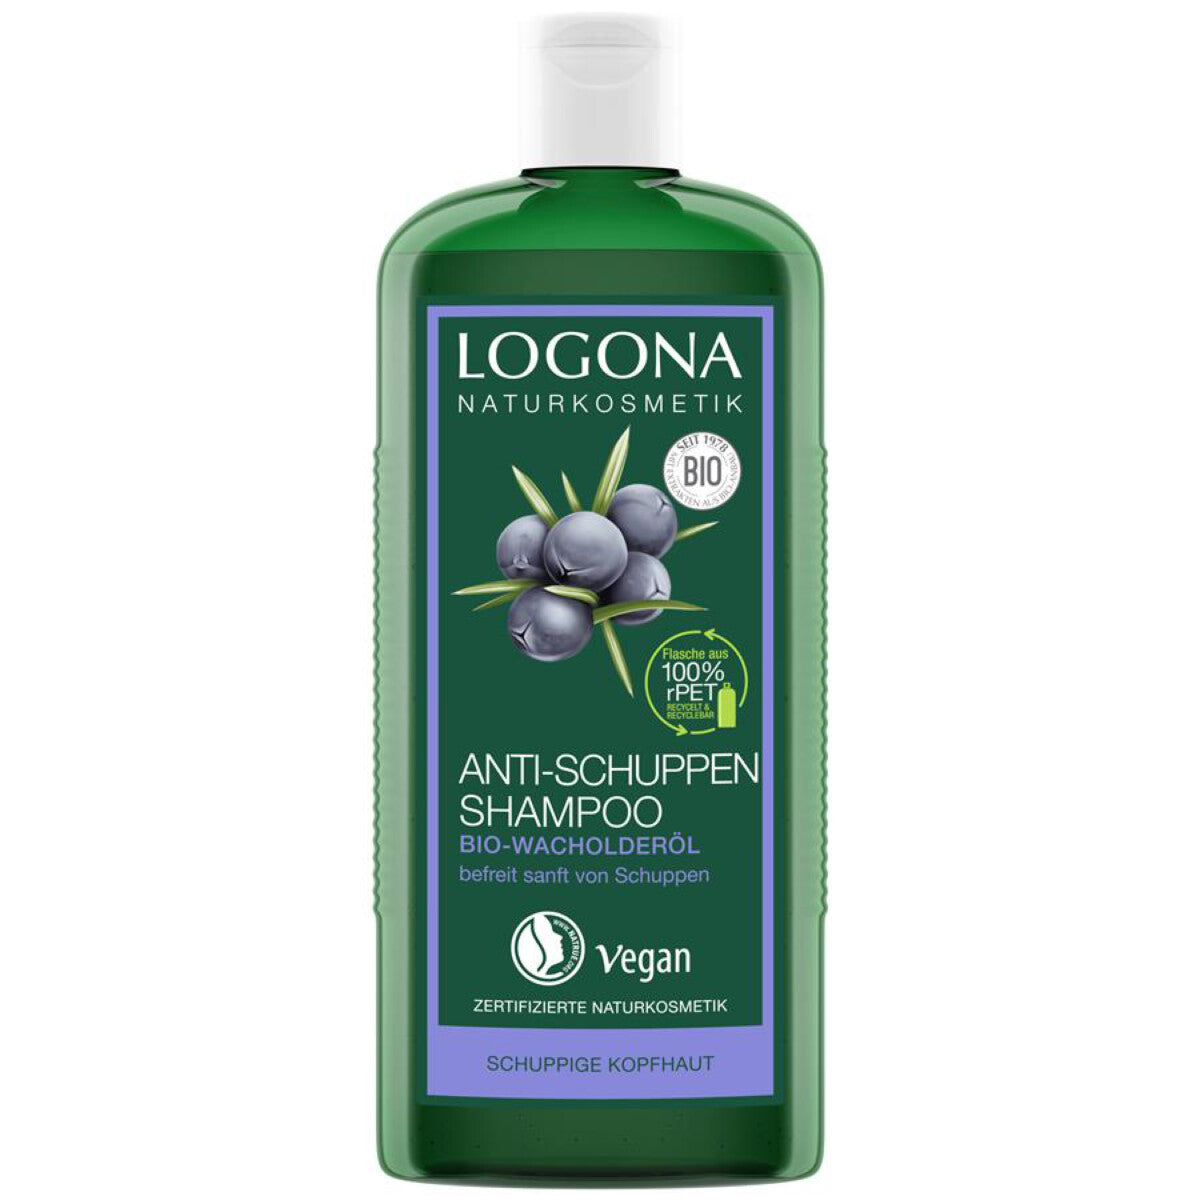 LOGONA Anti-Schuppen Wacholder Shampoo - 250 ml